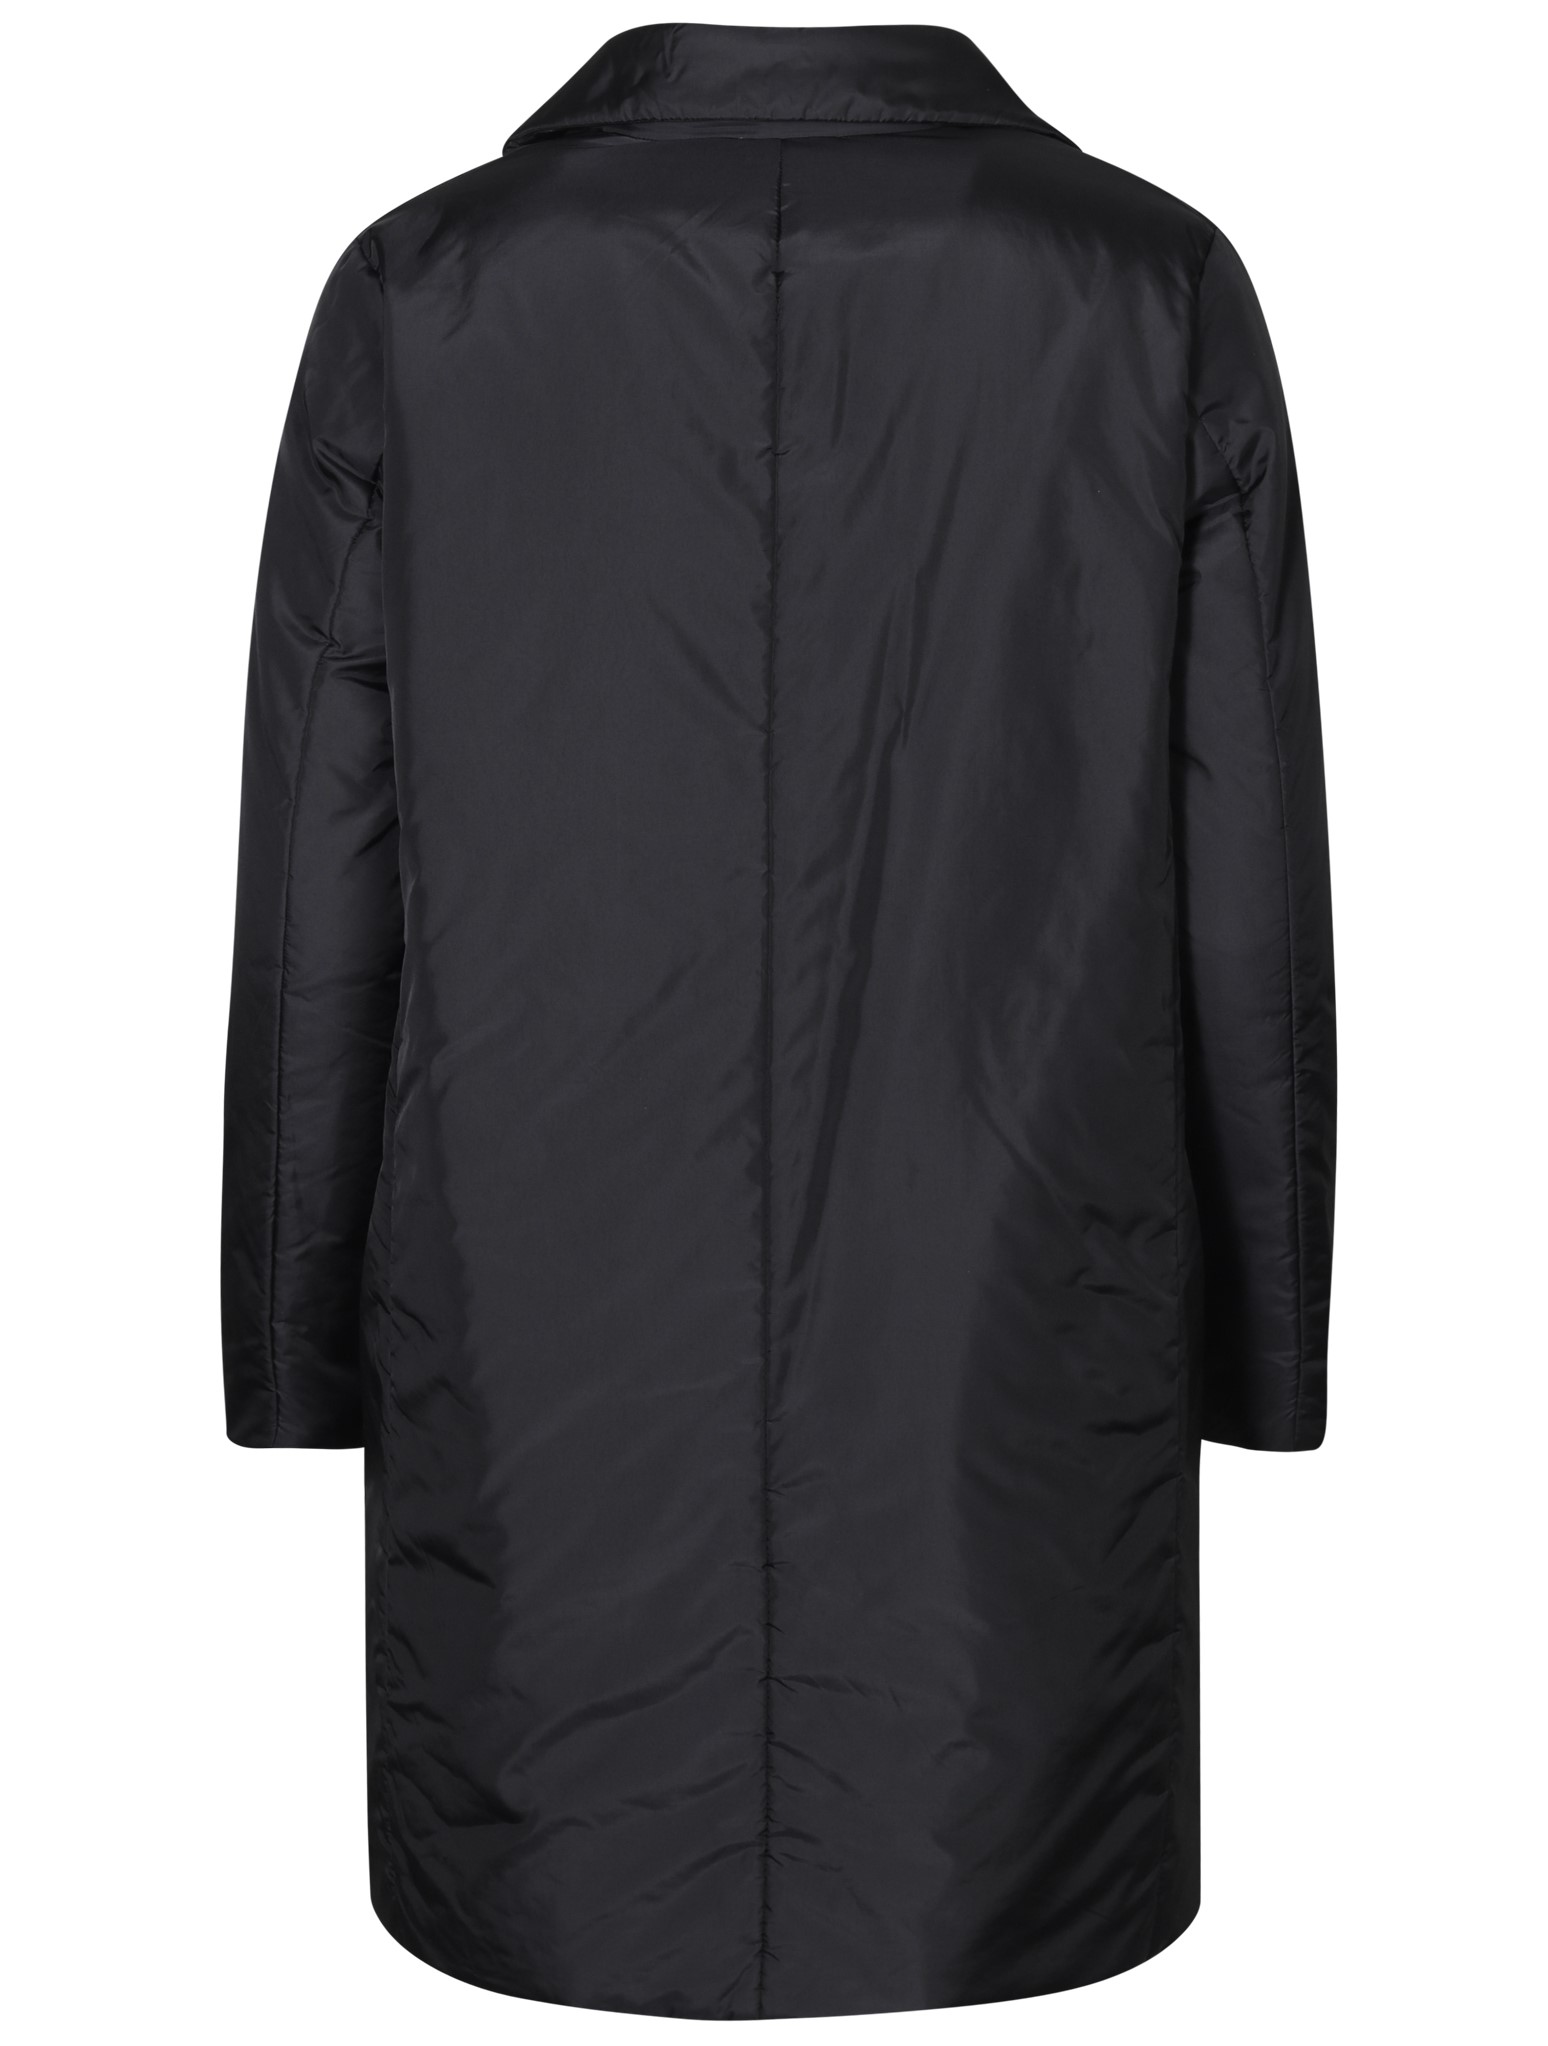 ASPESI Soft Padded Coat Teena in Black L